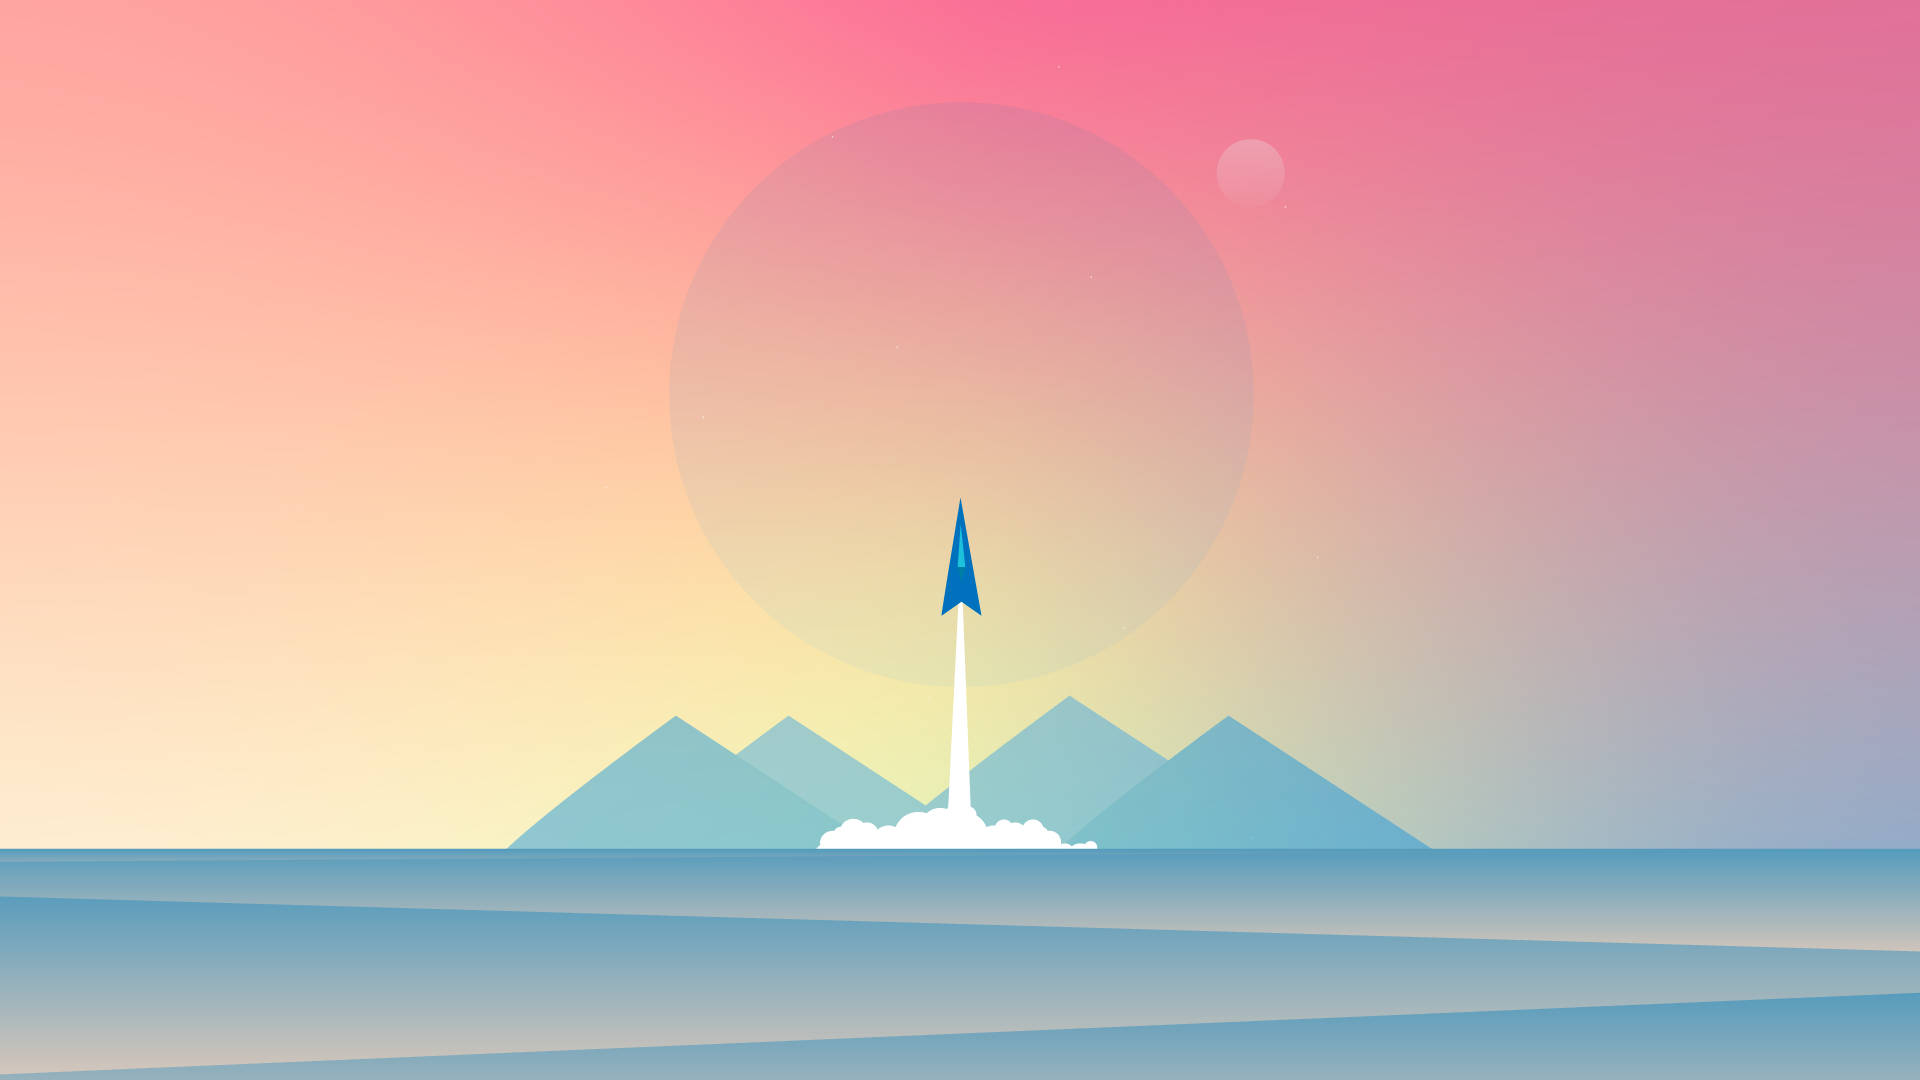 Rocket With Pyramids Digital Art Background